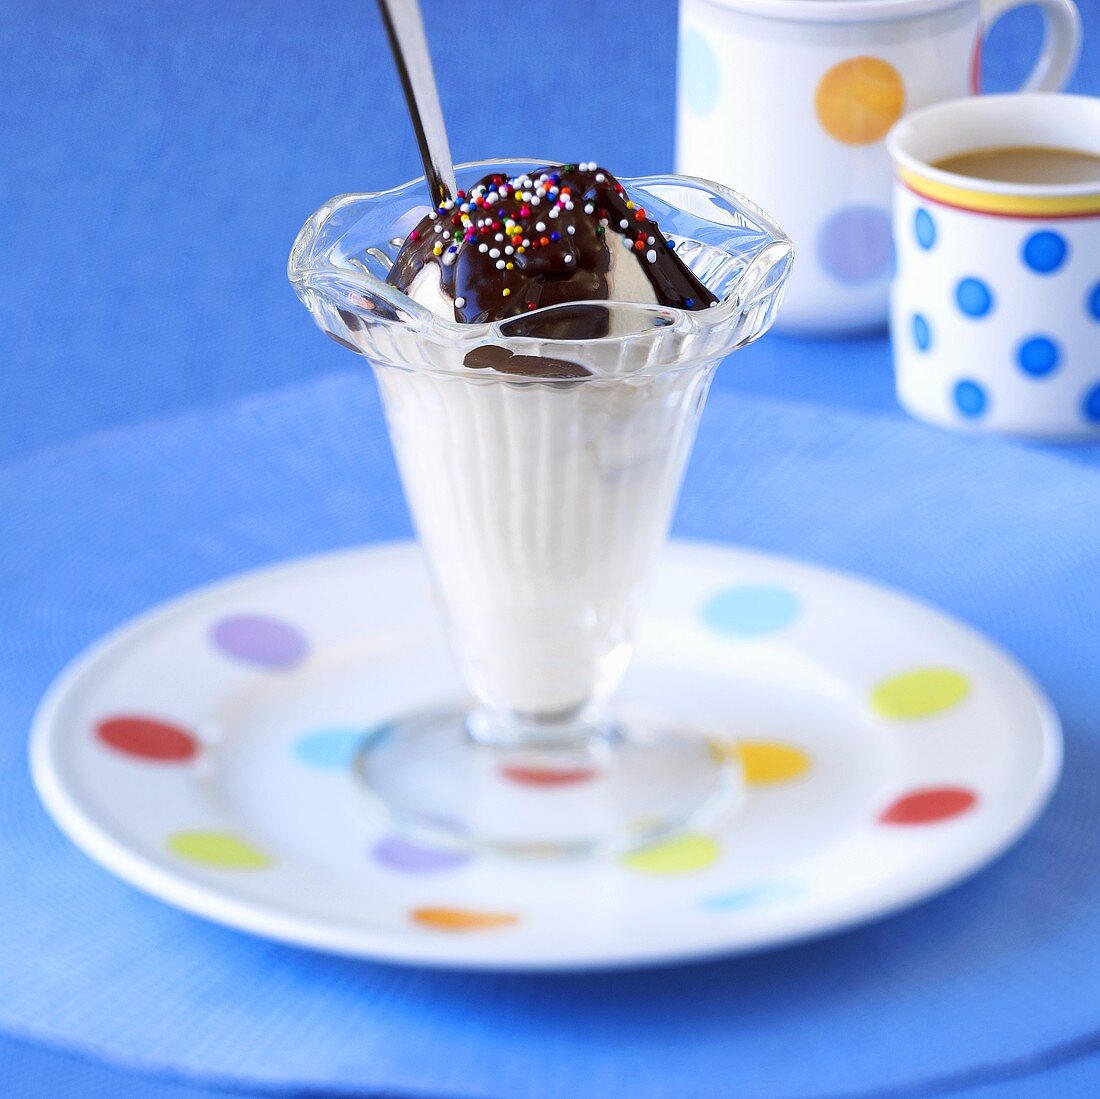 Ice cream sundae with chocolate sauce and sprinkles